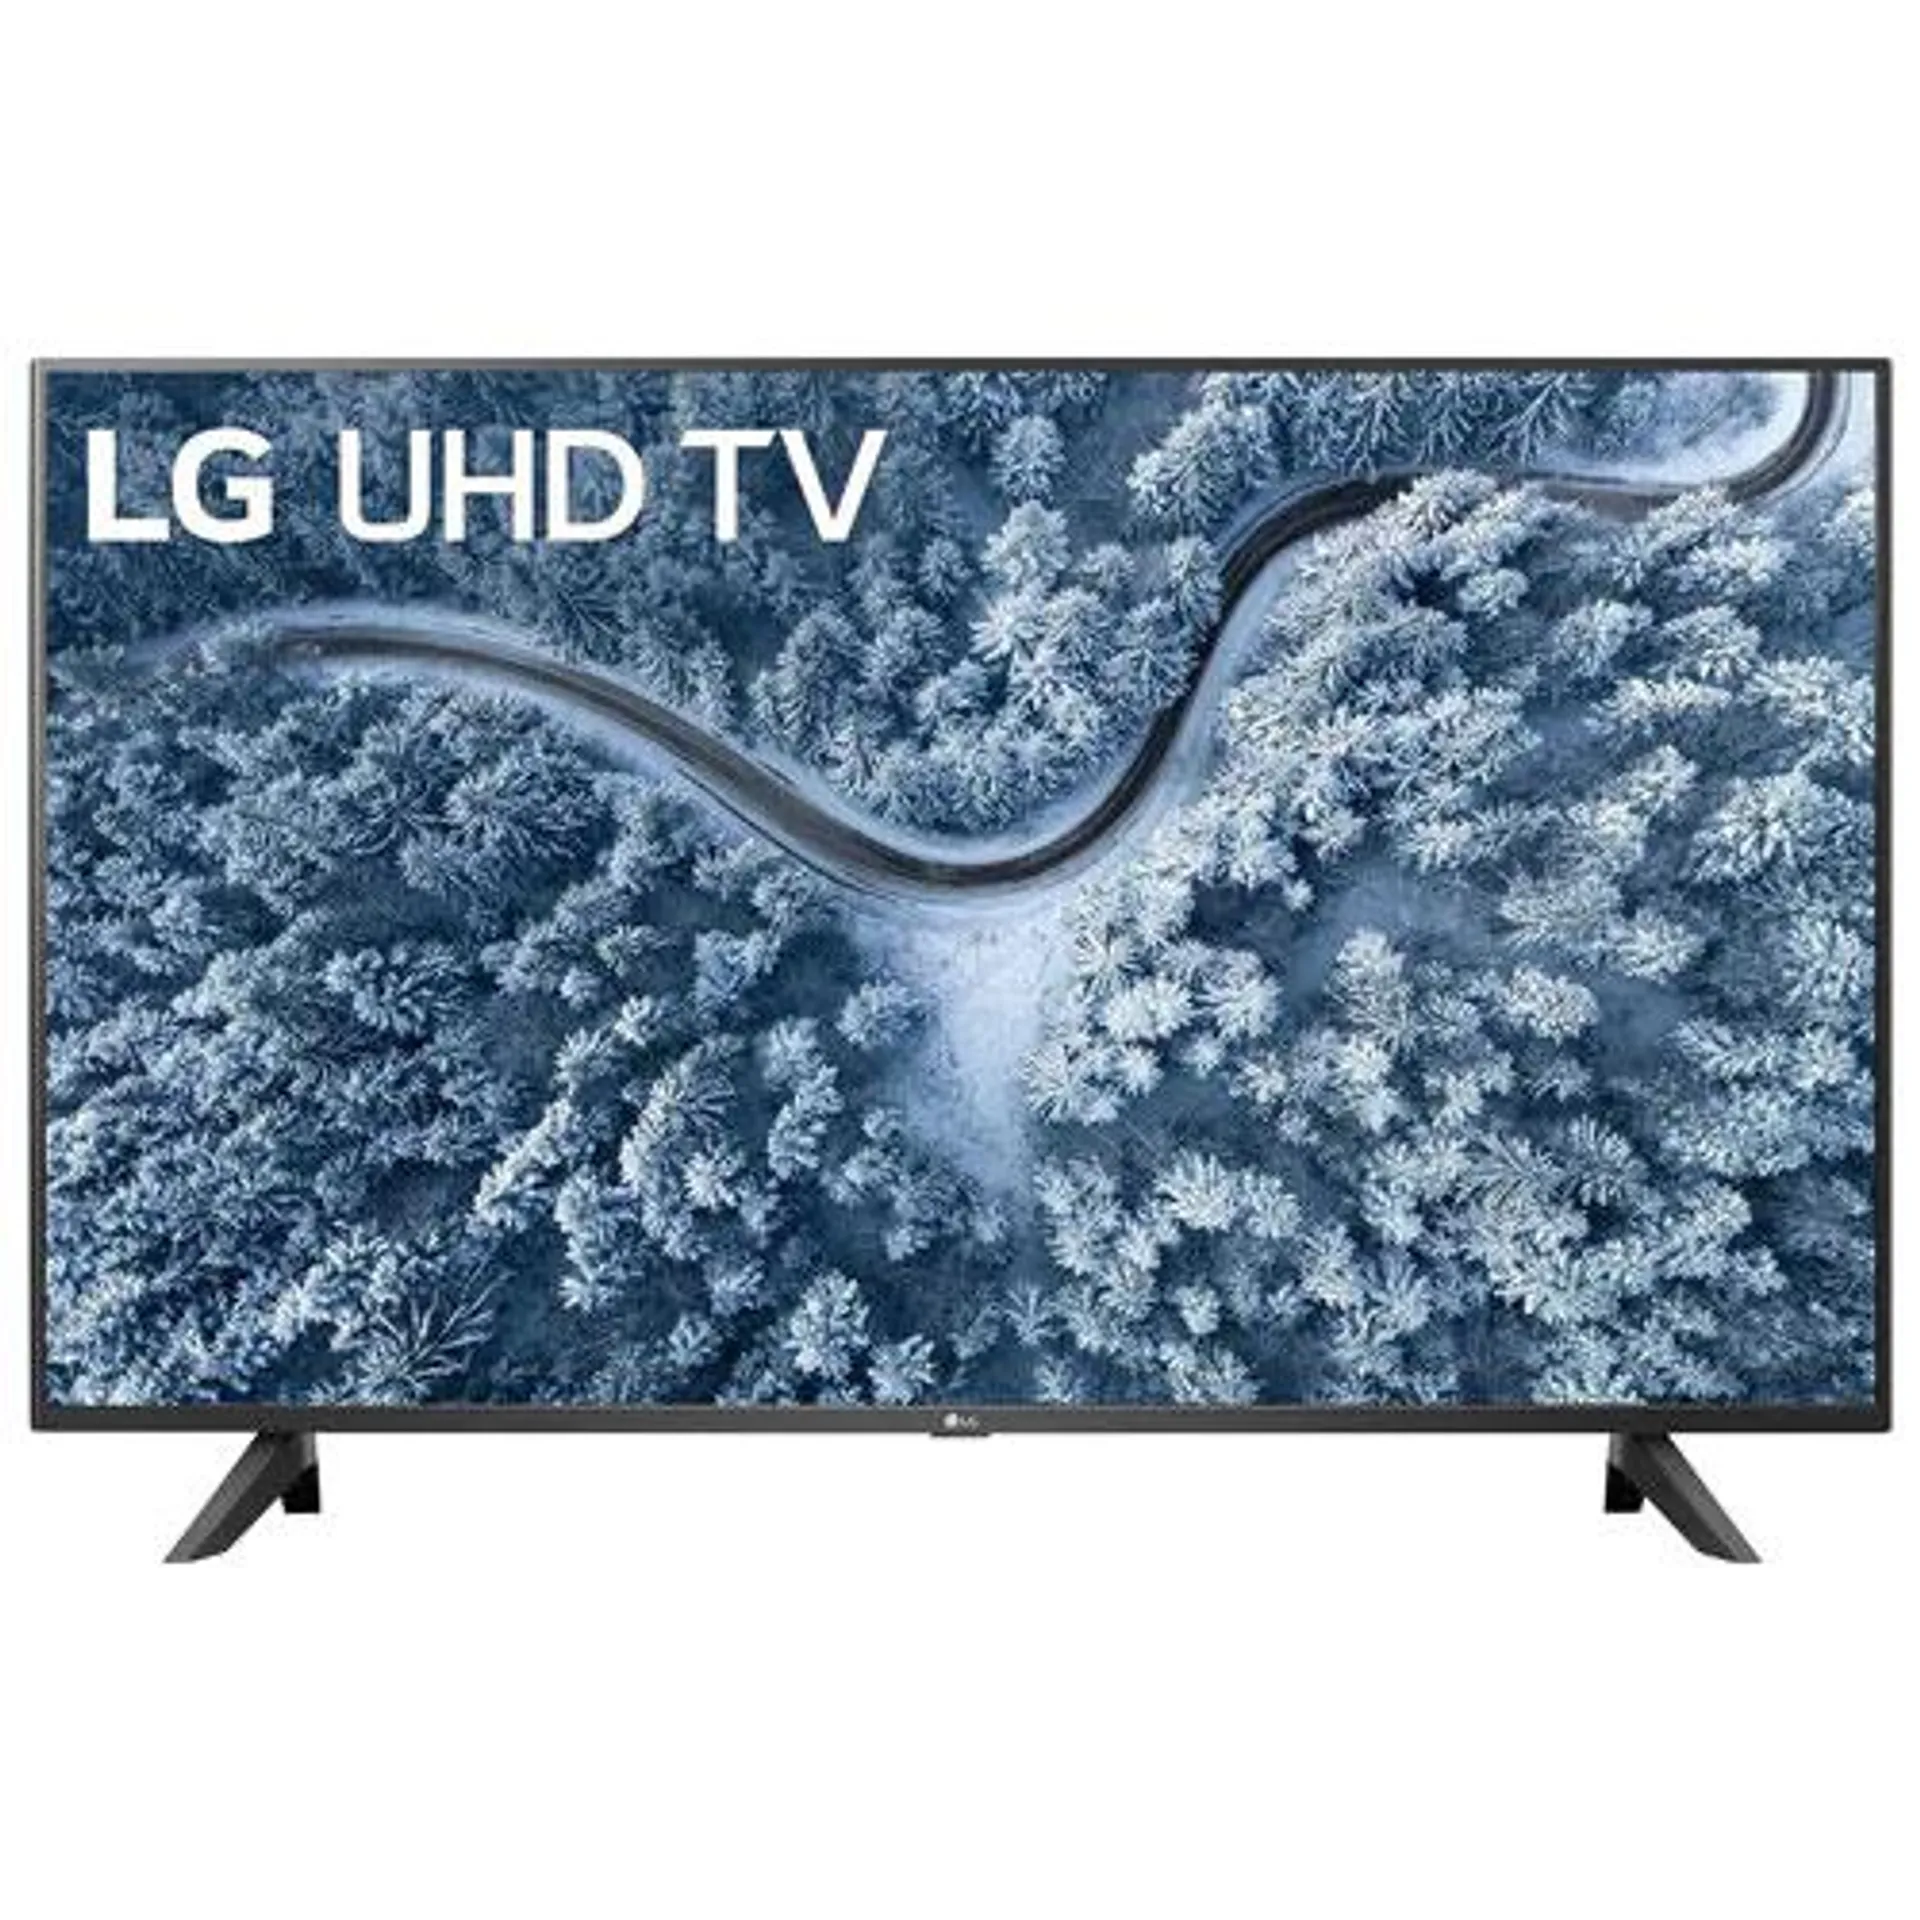 LG 50" 4K UHD HDR LCD webOS Smart TV (50UP7000PUA) - 2021